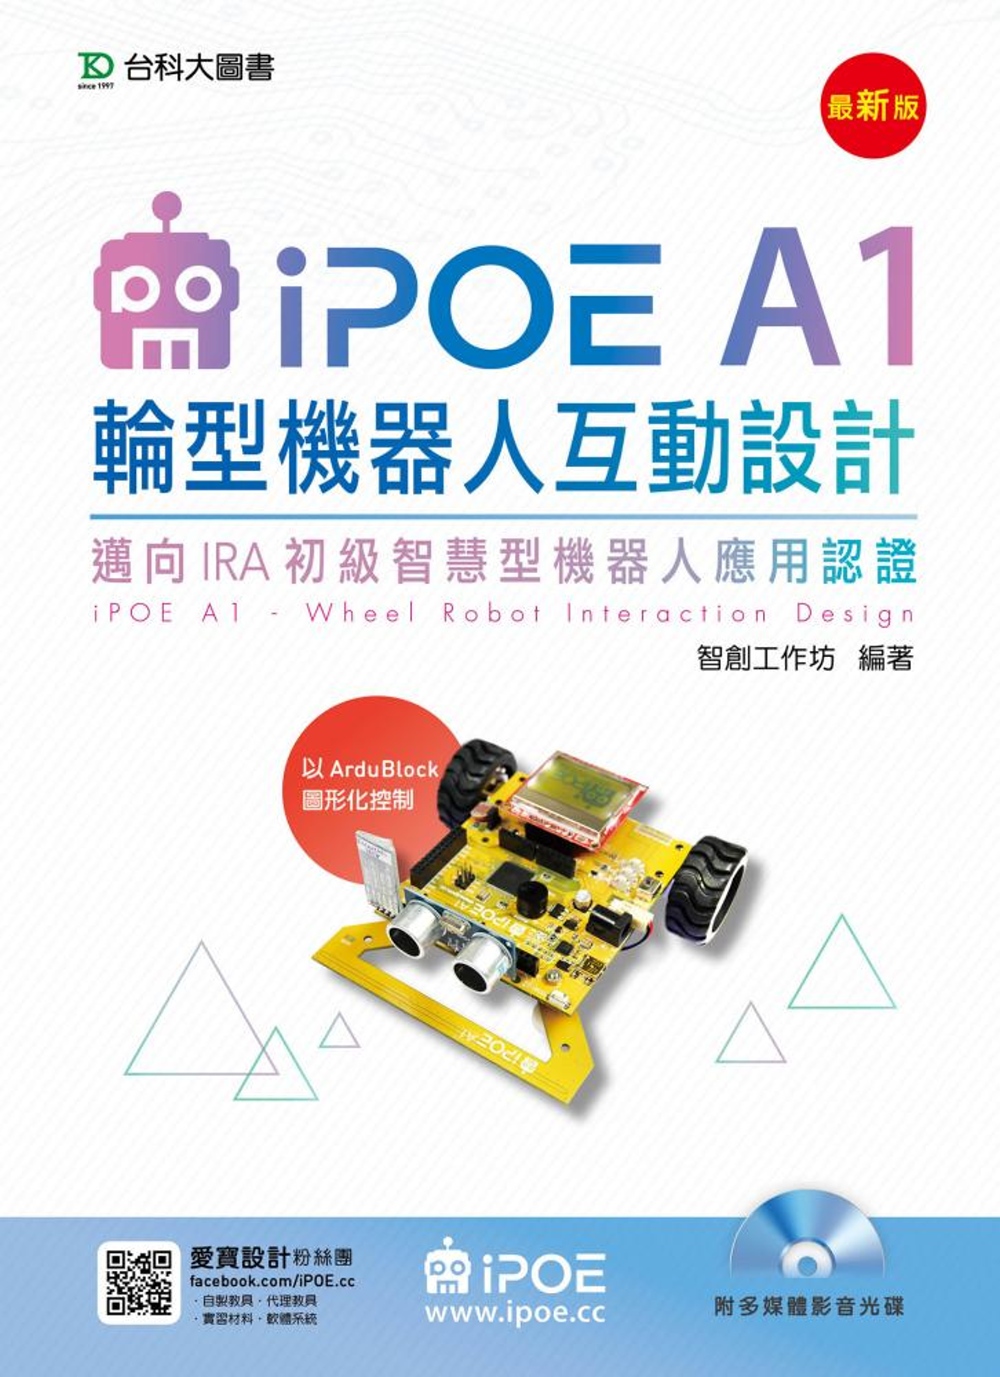 iPOE A1輪型機器人互動設計 - 邁向IRA初級智慧型機...